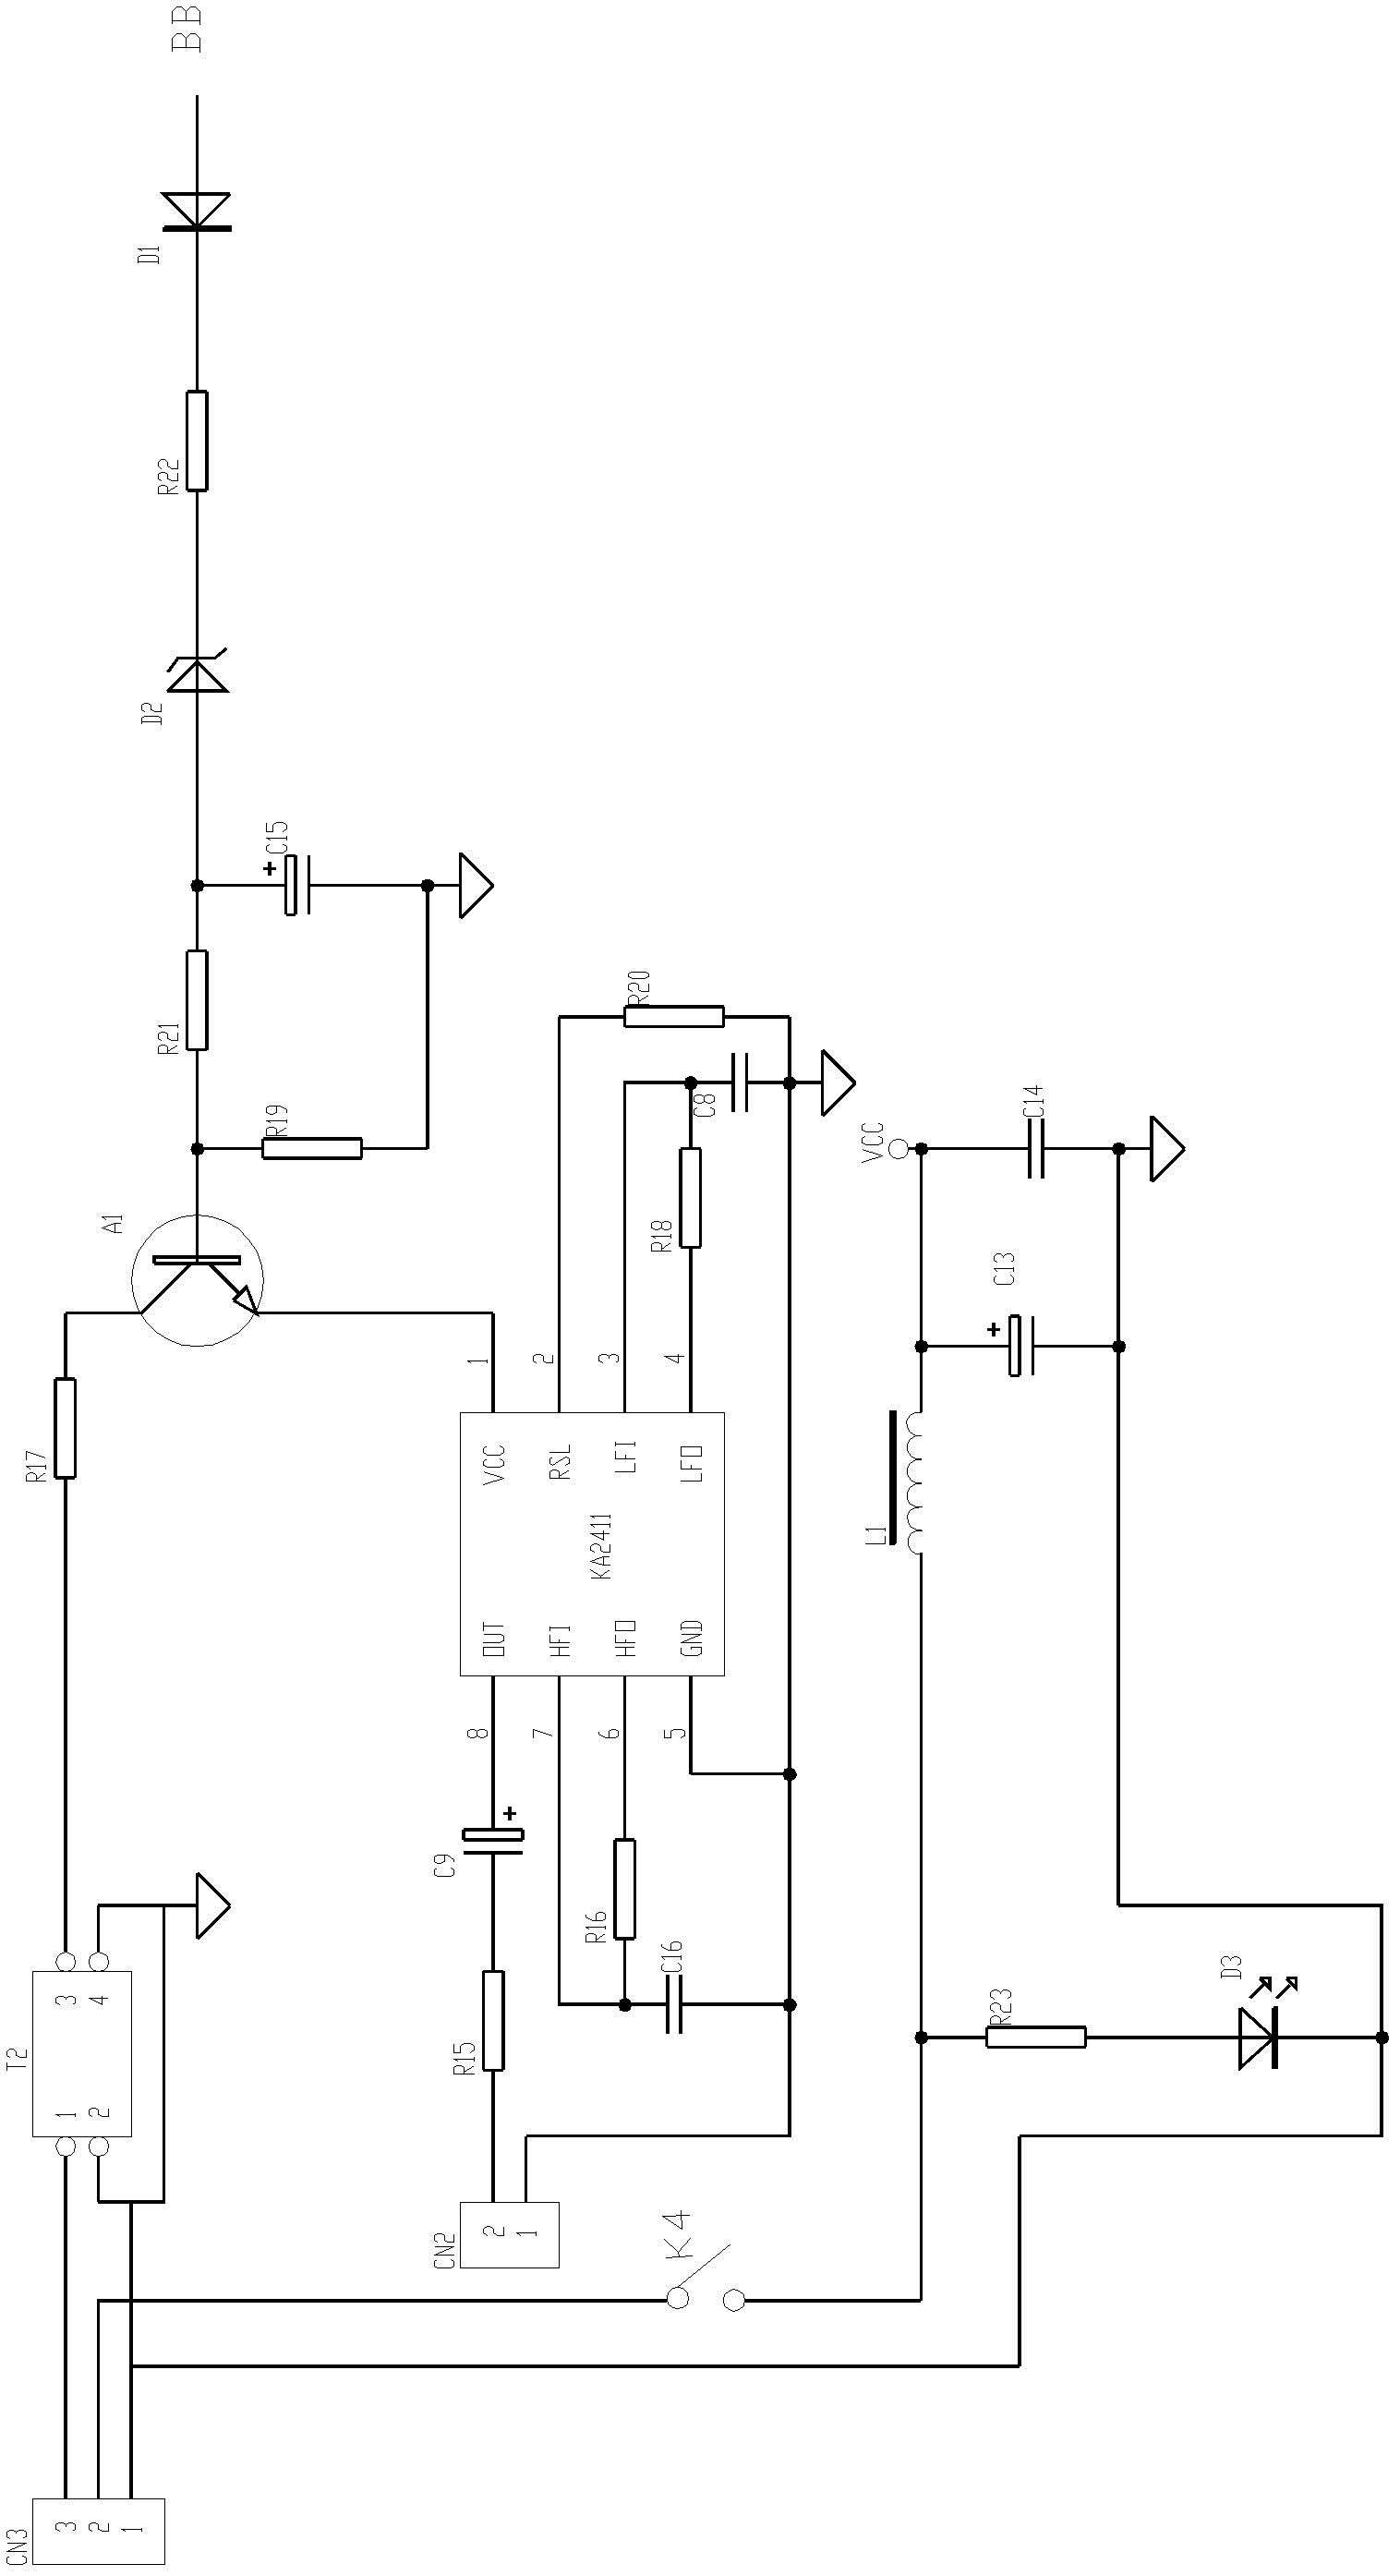 Telephone system of locomotive under coupled running mode